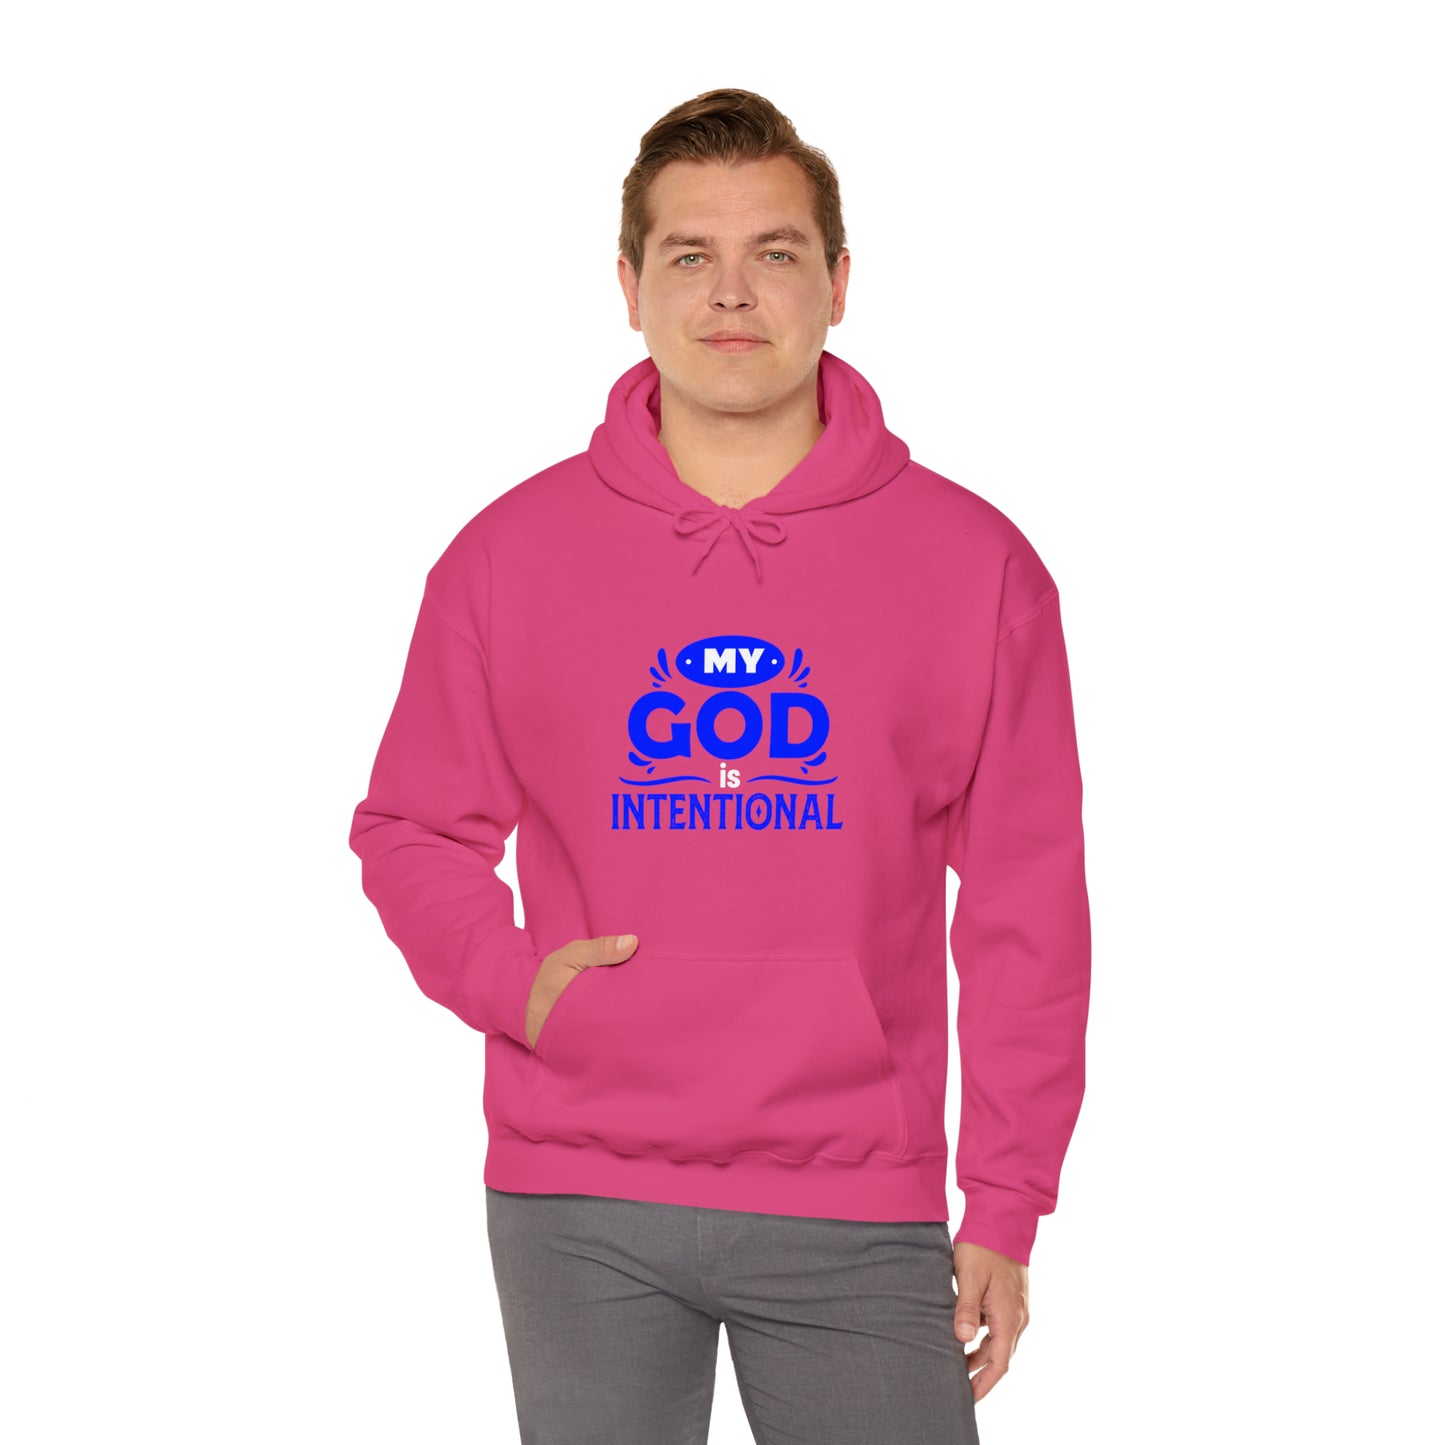 My God Is Intentional  Unisex Hooded Sweatshirt